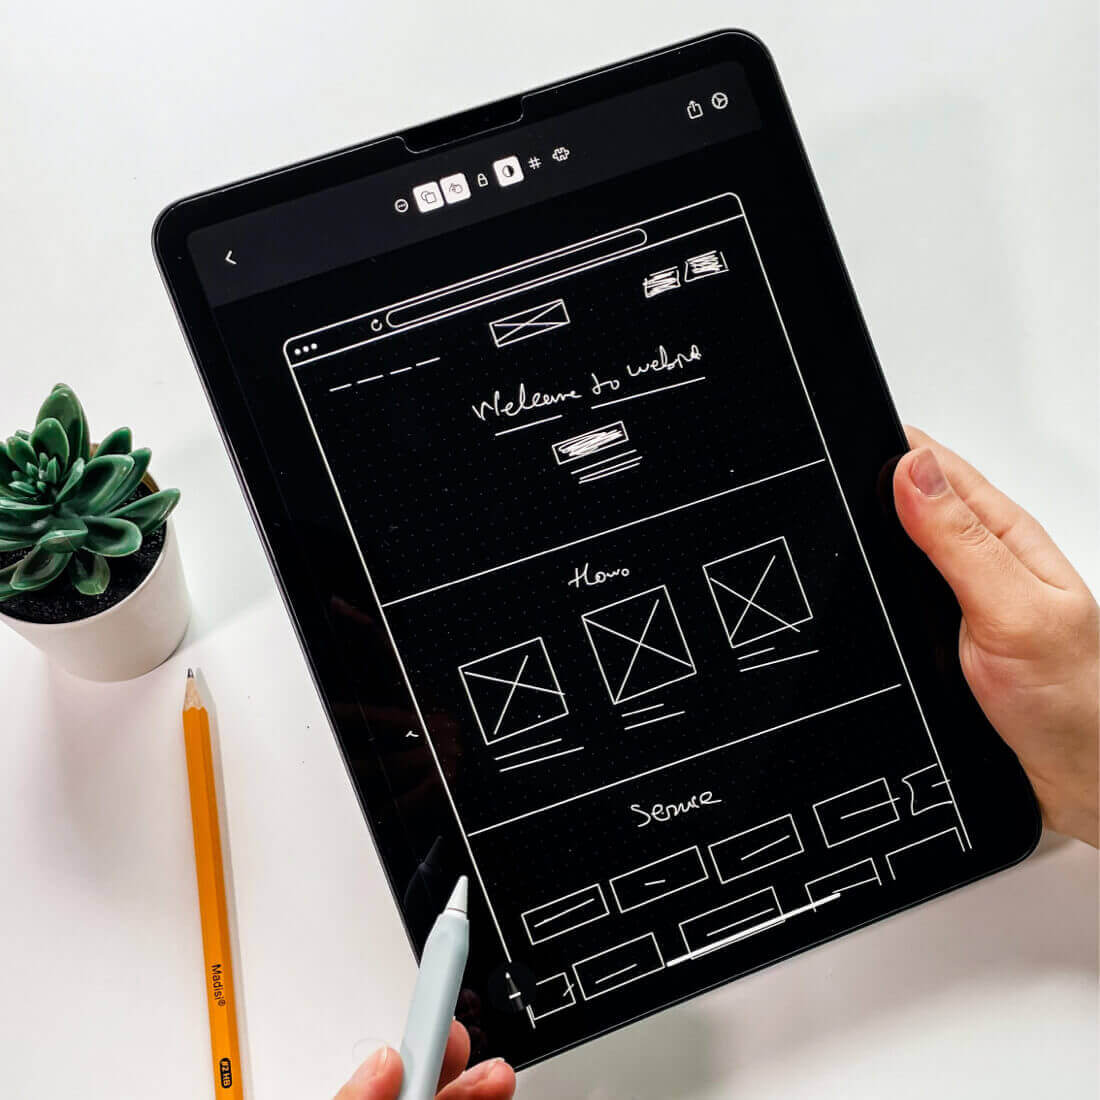 Tablet screen with a conceptual sketch of a website idea